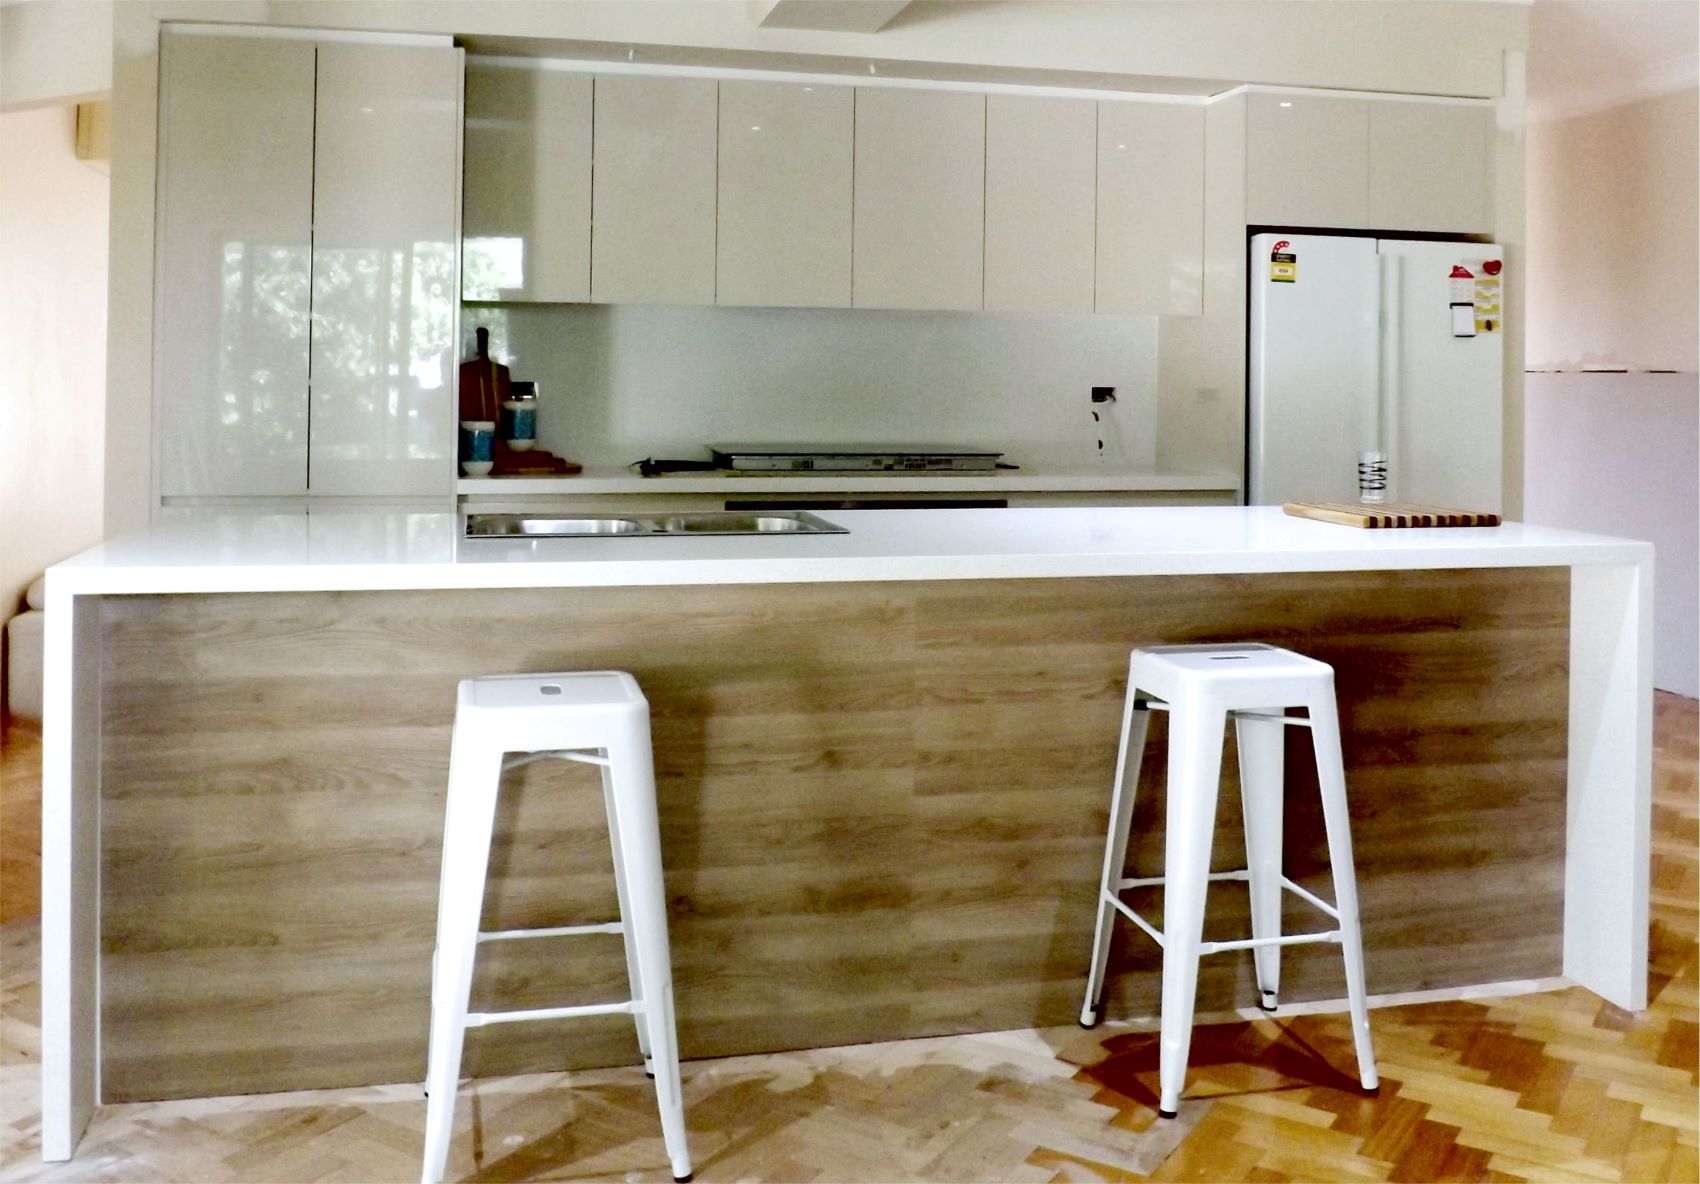 Gally kitchen in Minto Sydney